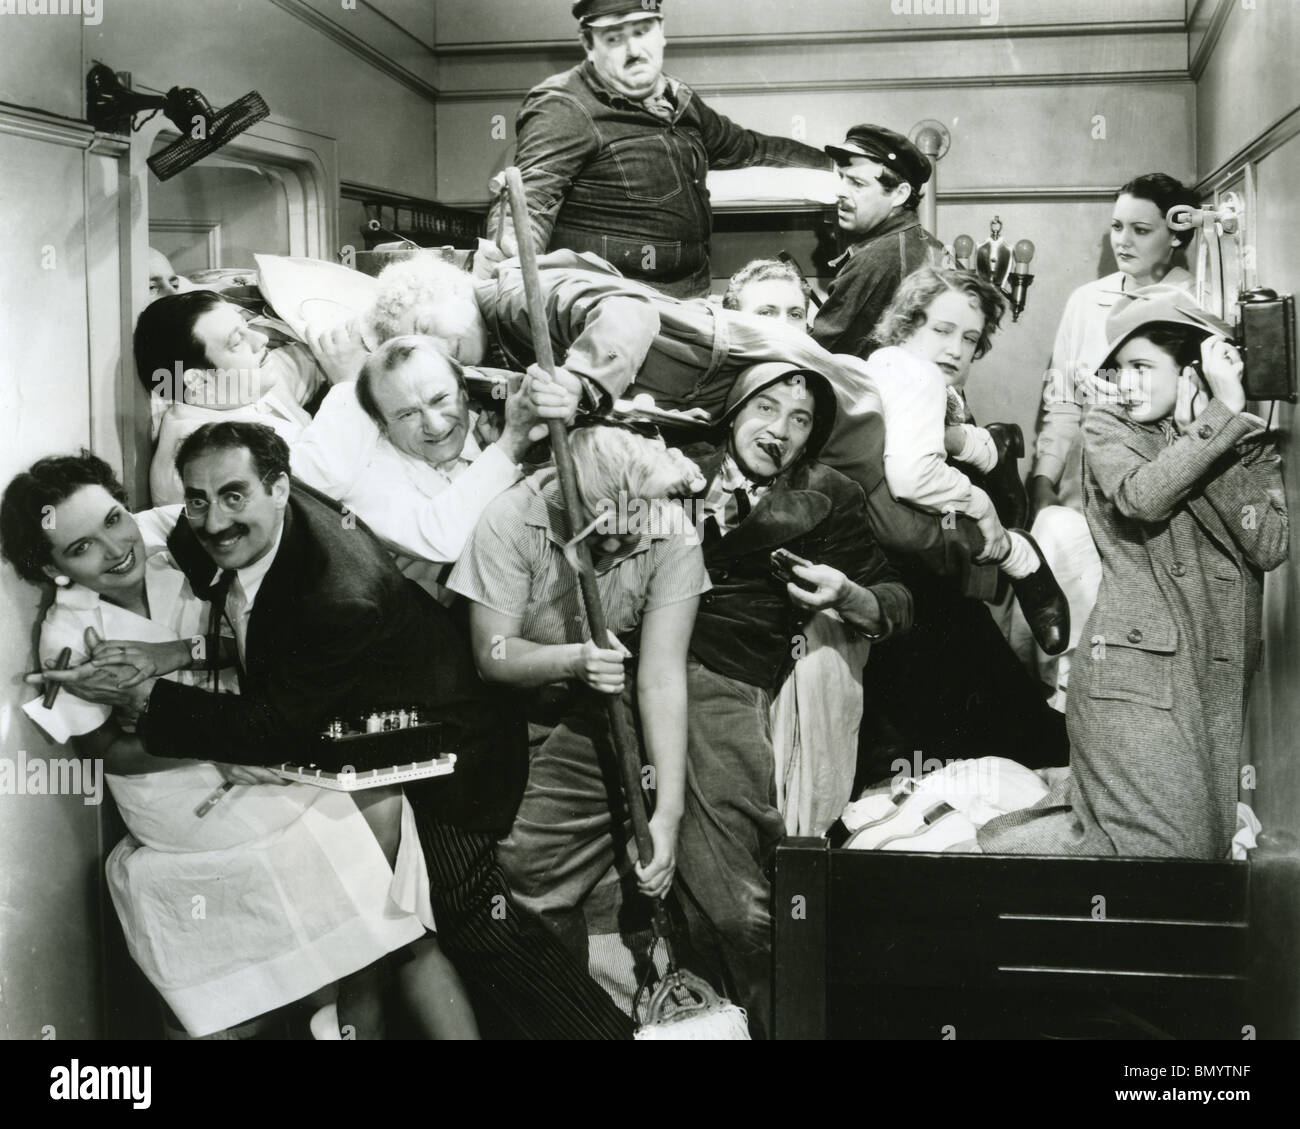 Una notte all'OPERA 1935 MGM film con i fratelli Marx Foto Stock